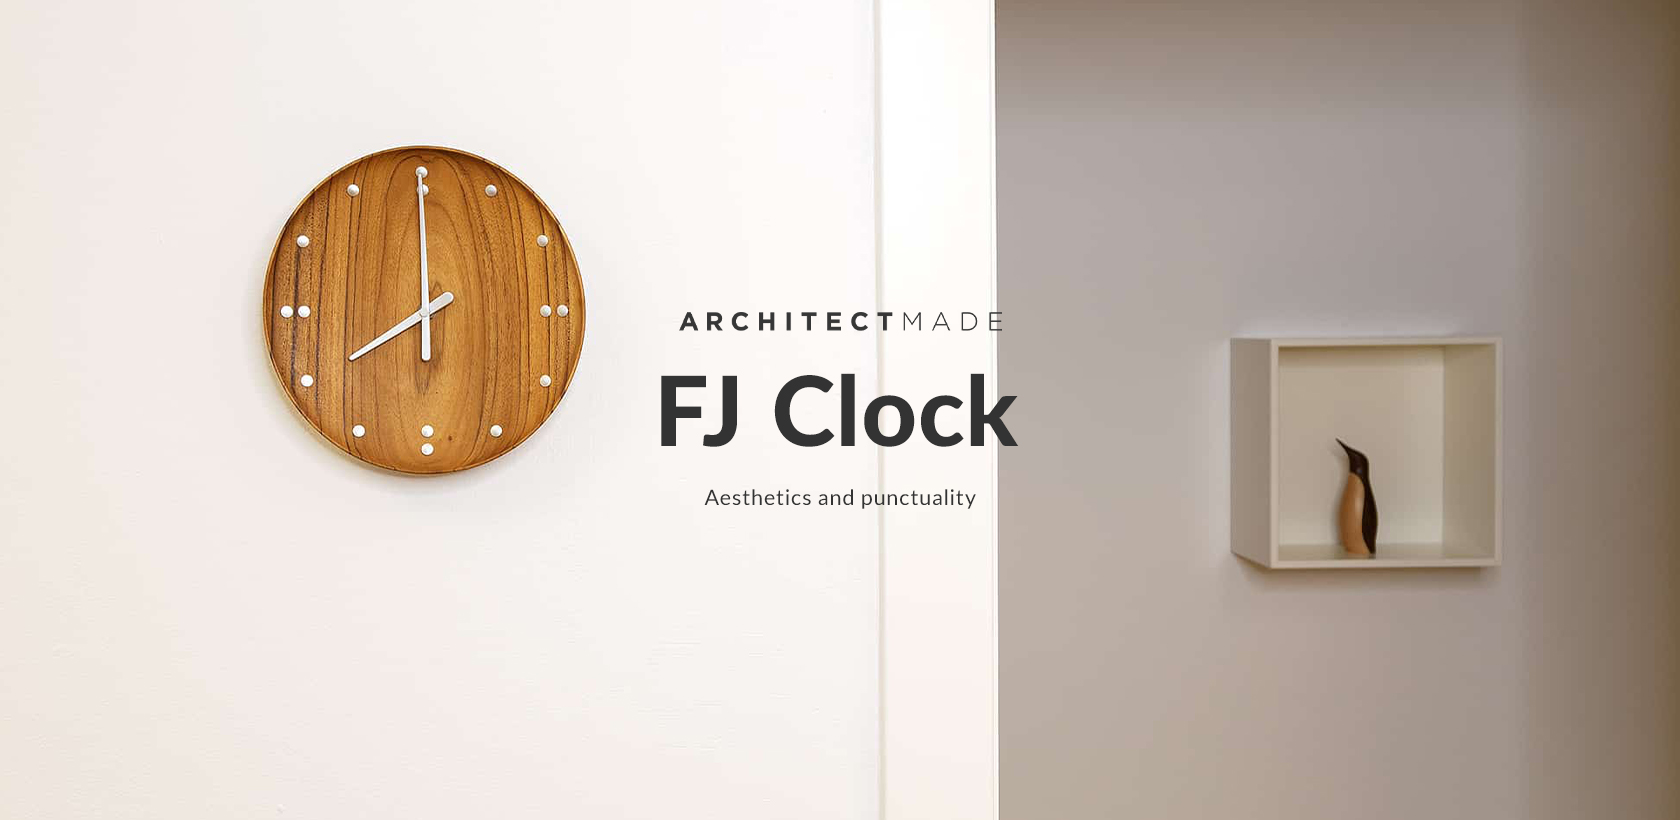 ARCHITECTMADE Fj Clock Aesthetics and punctuality